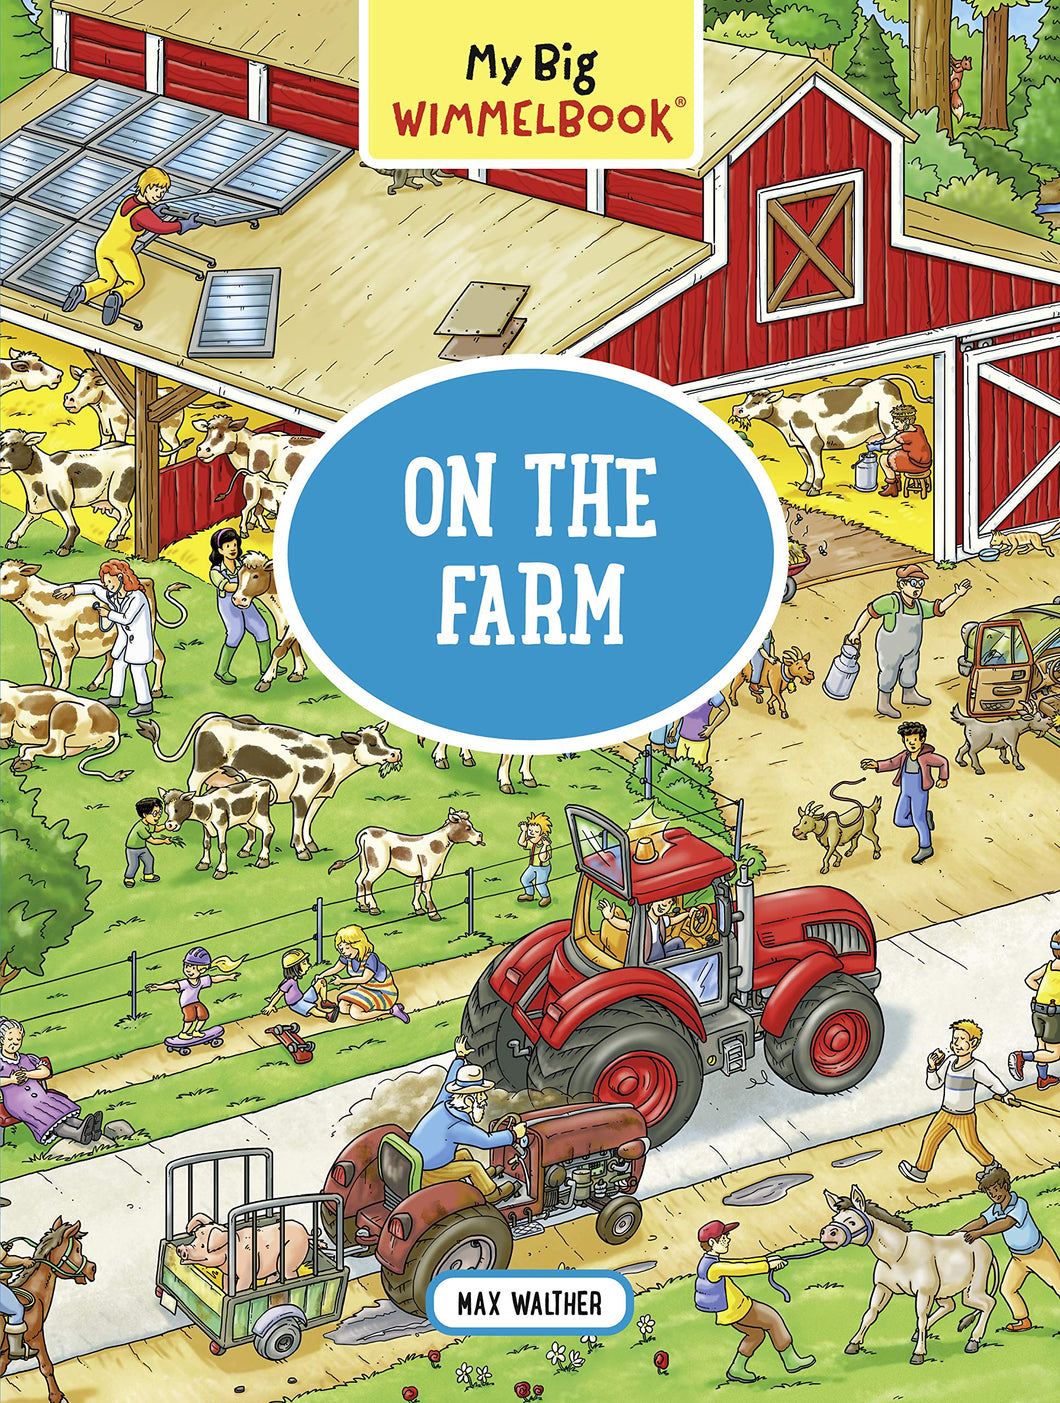 My Big Wimmelbook―On the Farm